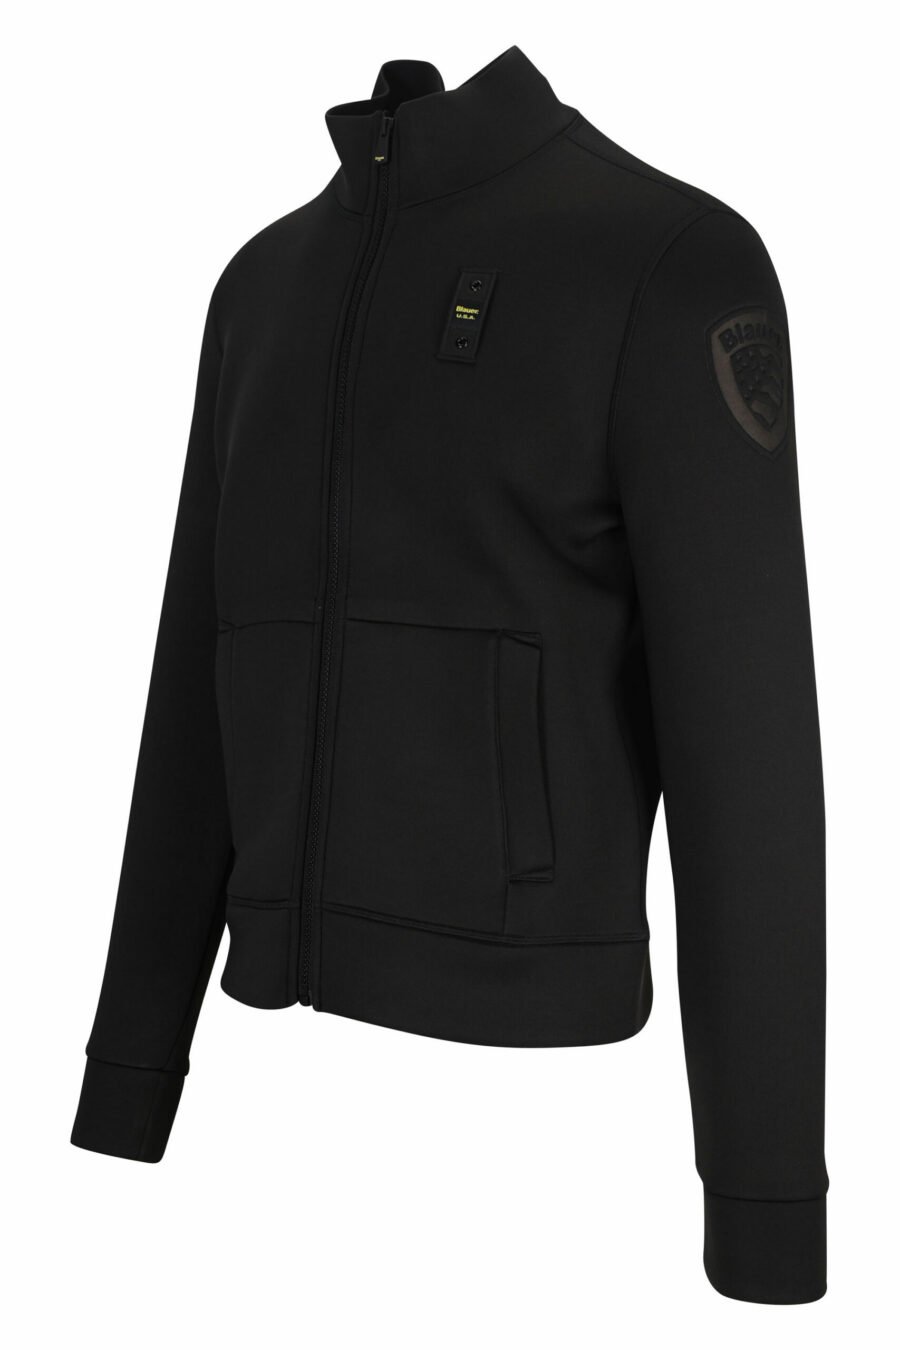 Black zip-up sweatshirt with monochrome logo patch - 8058610660024 1 scaled